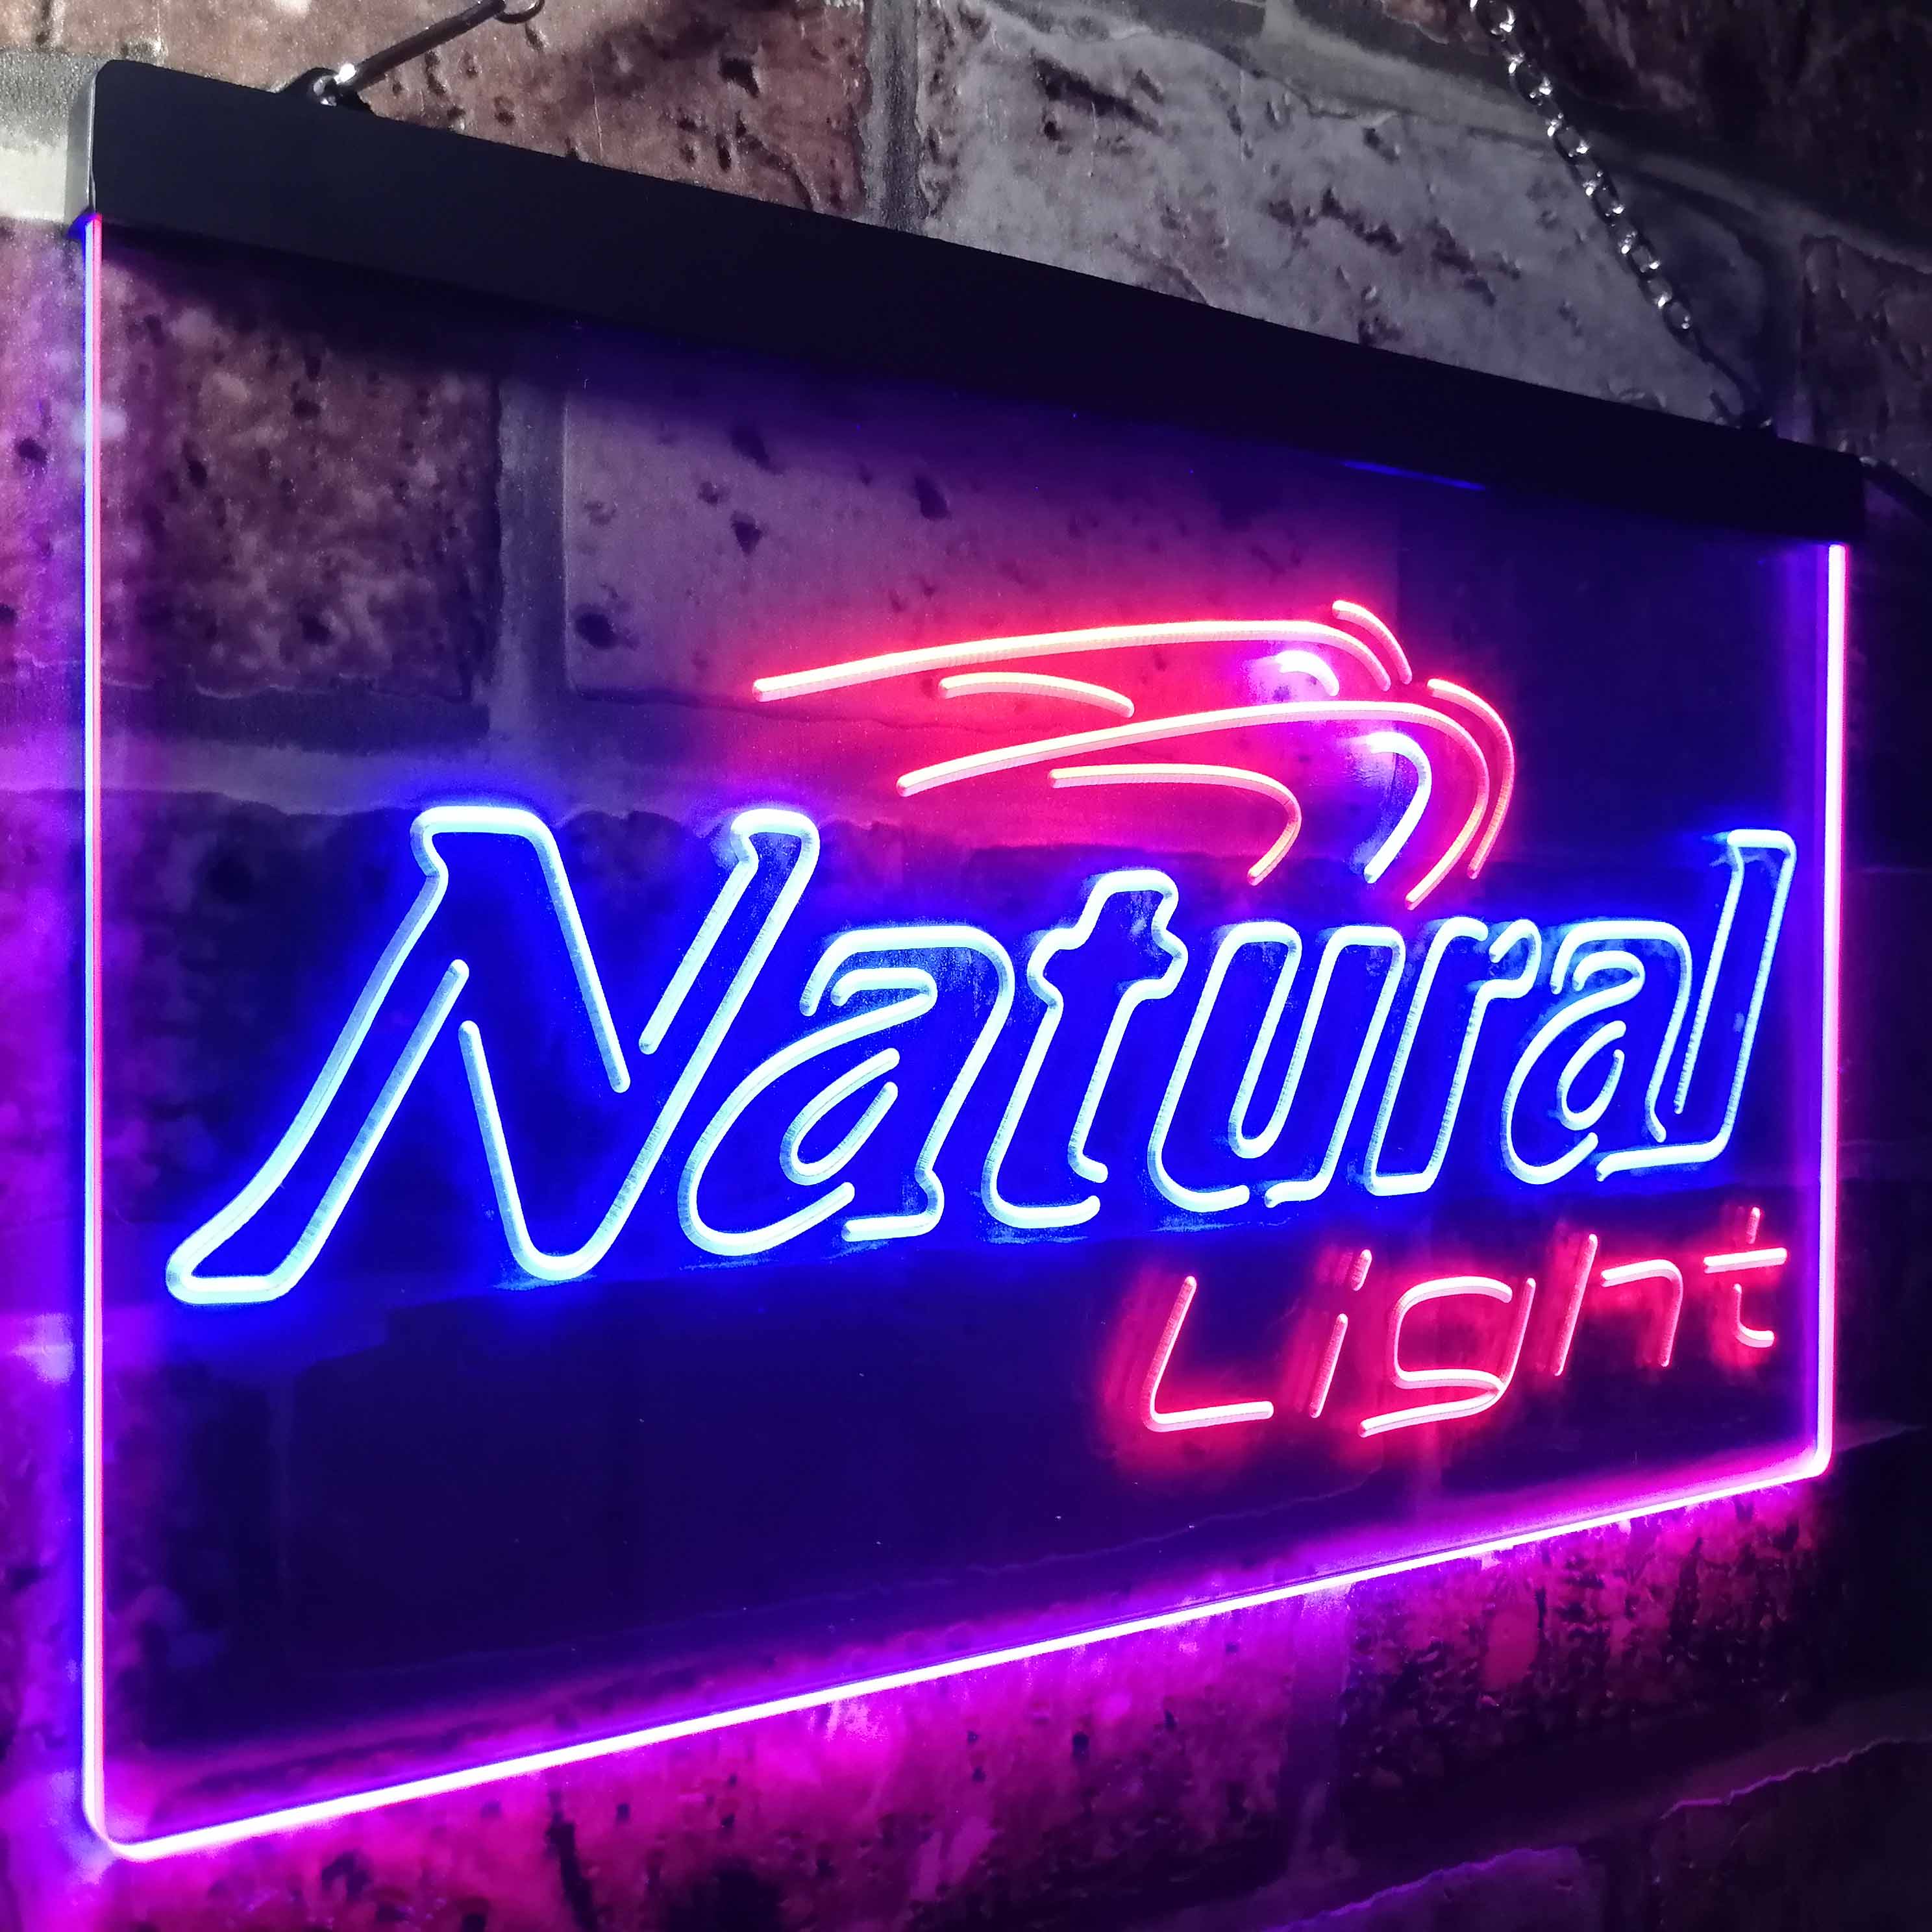 Natural Light Beer Bar Gift LED Neon Sign